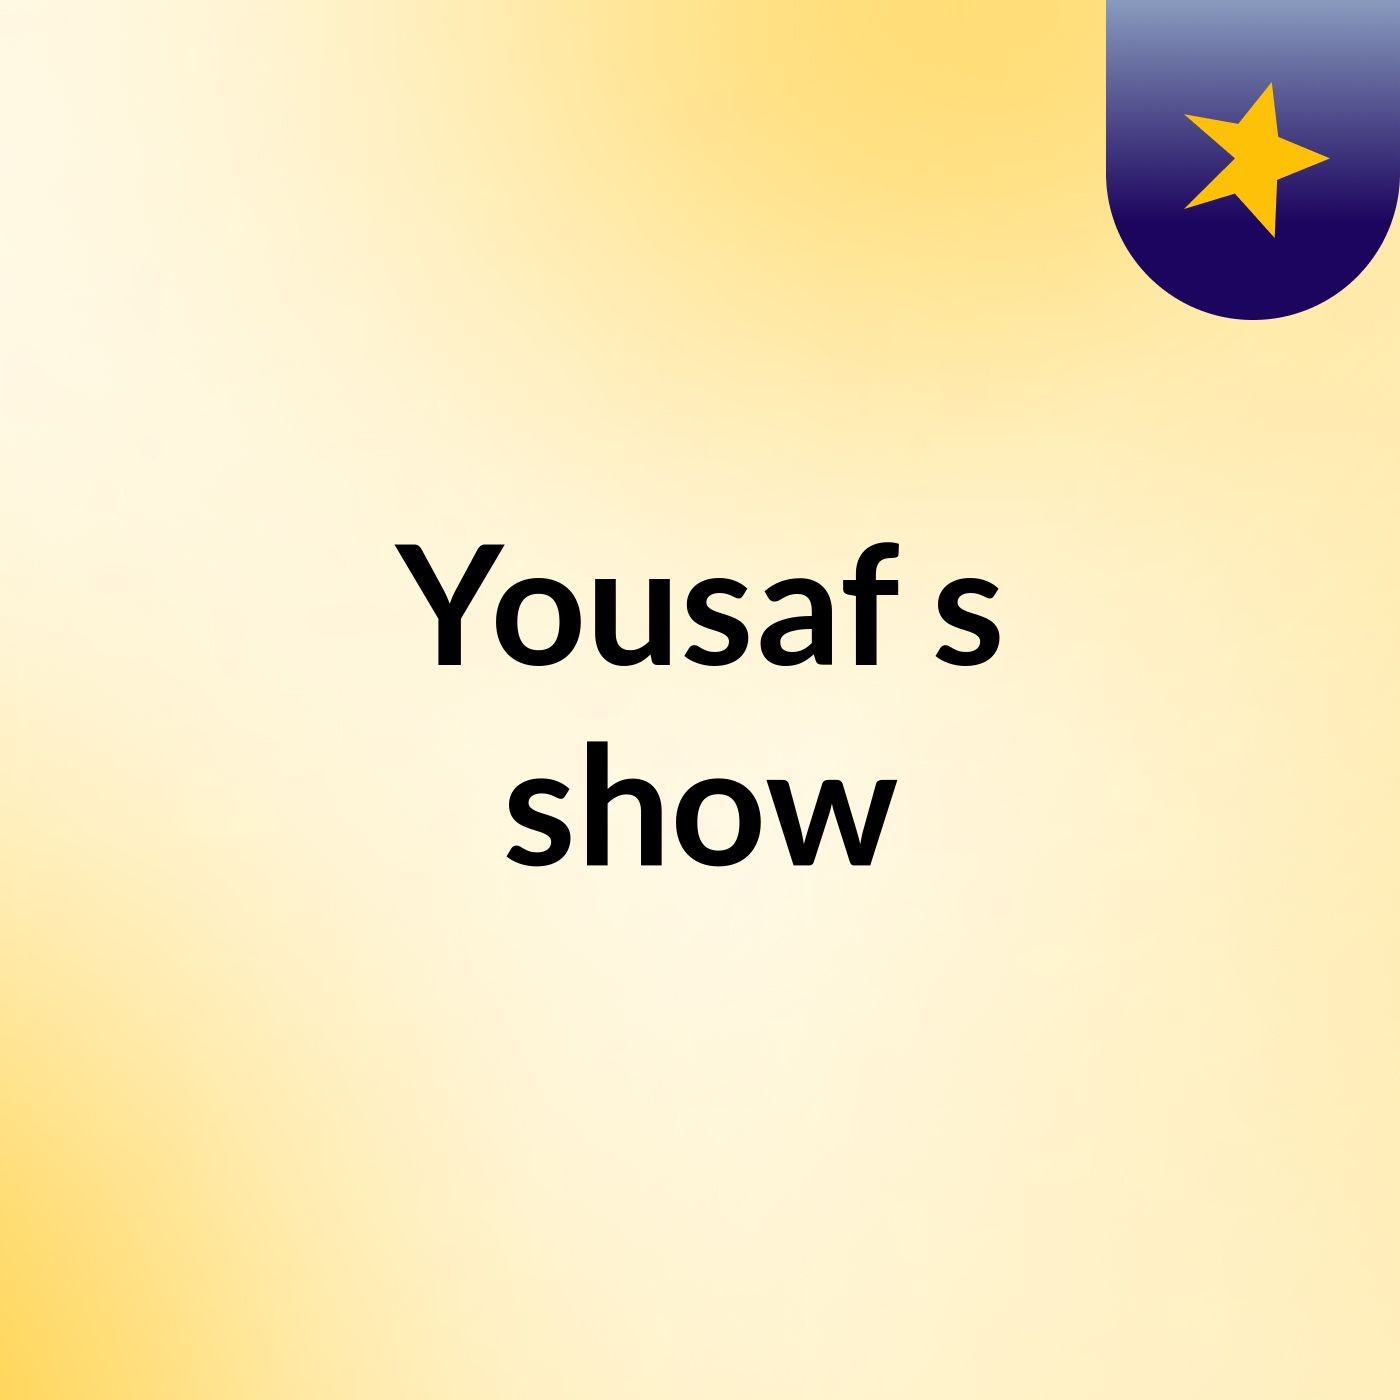 Yousaf's show